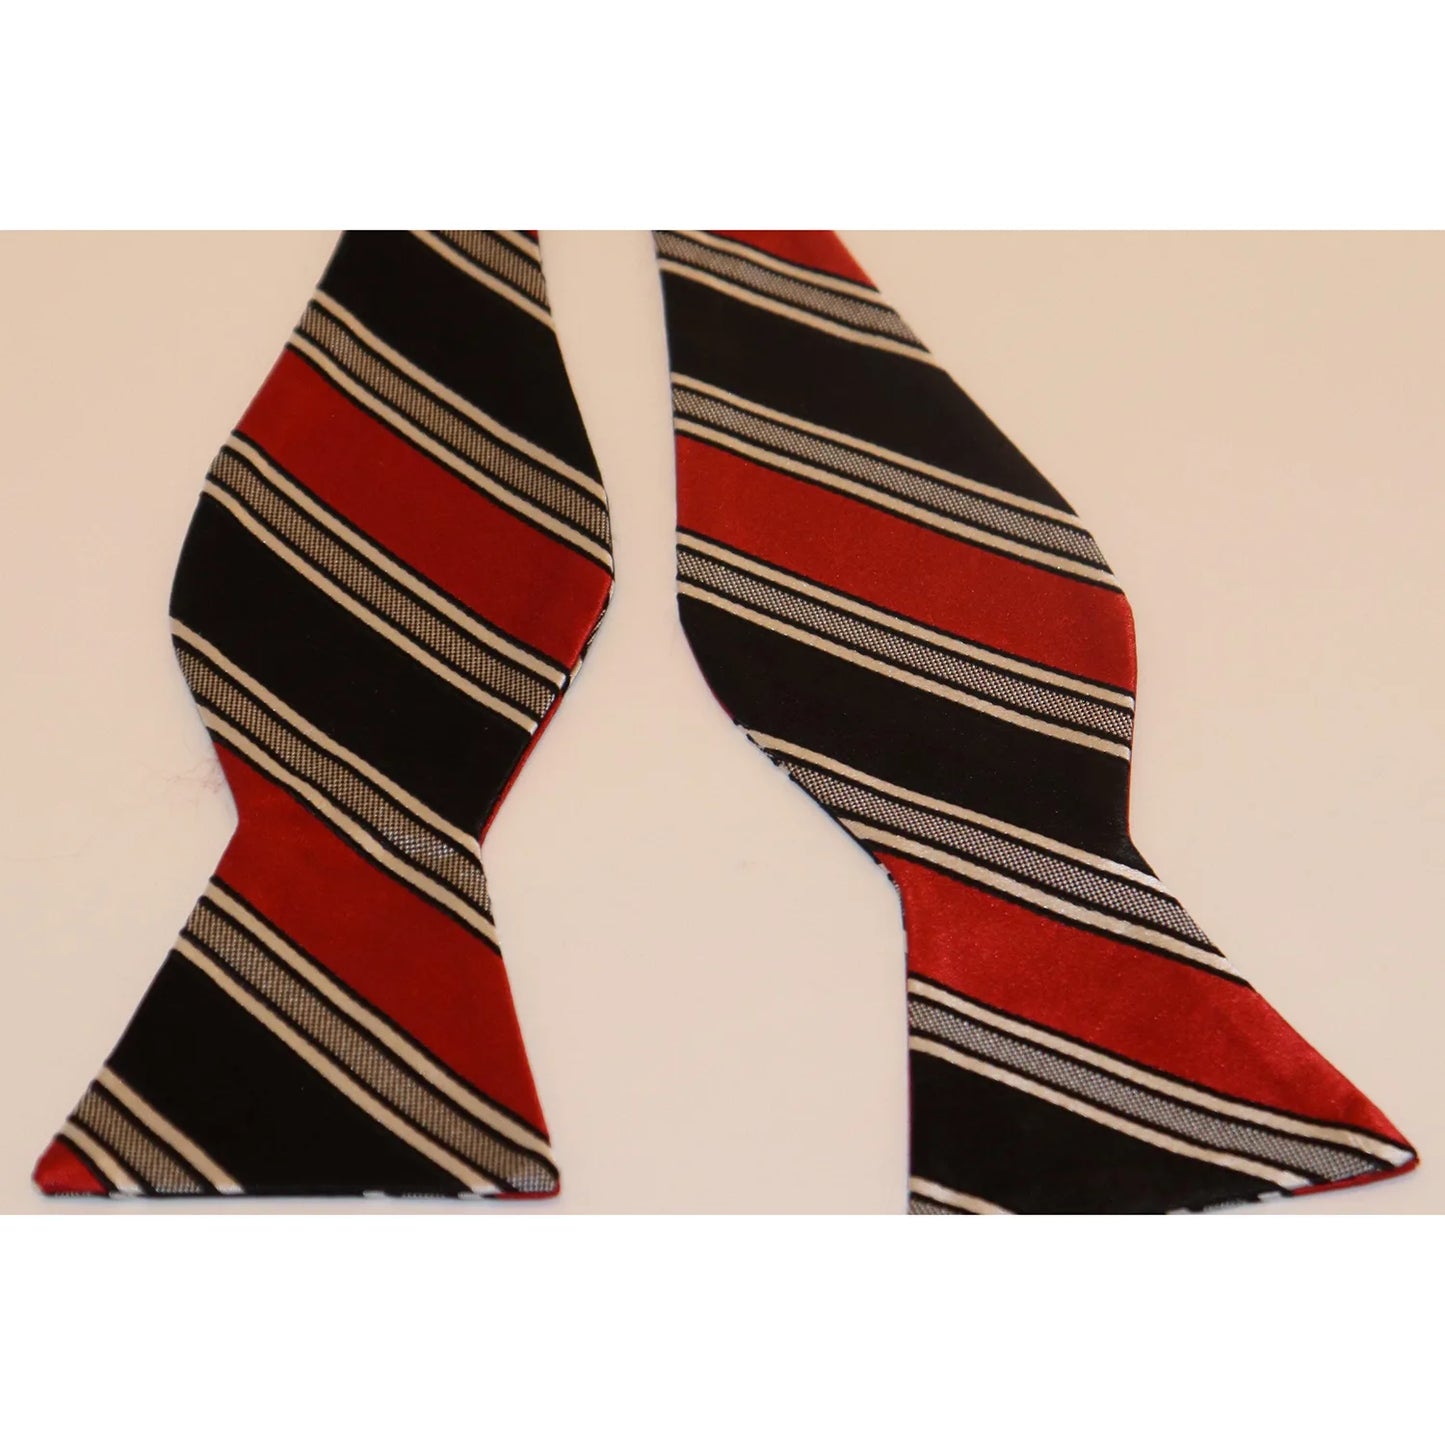 Scotty Z Bow Tie - Black/Red/Silver/White Stripe